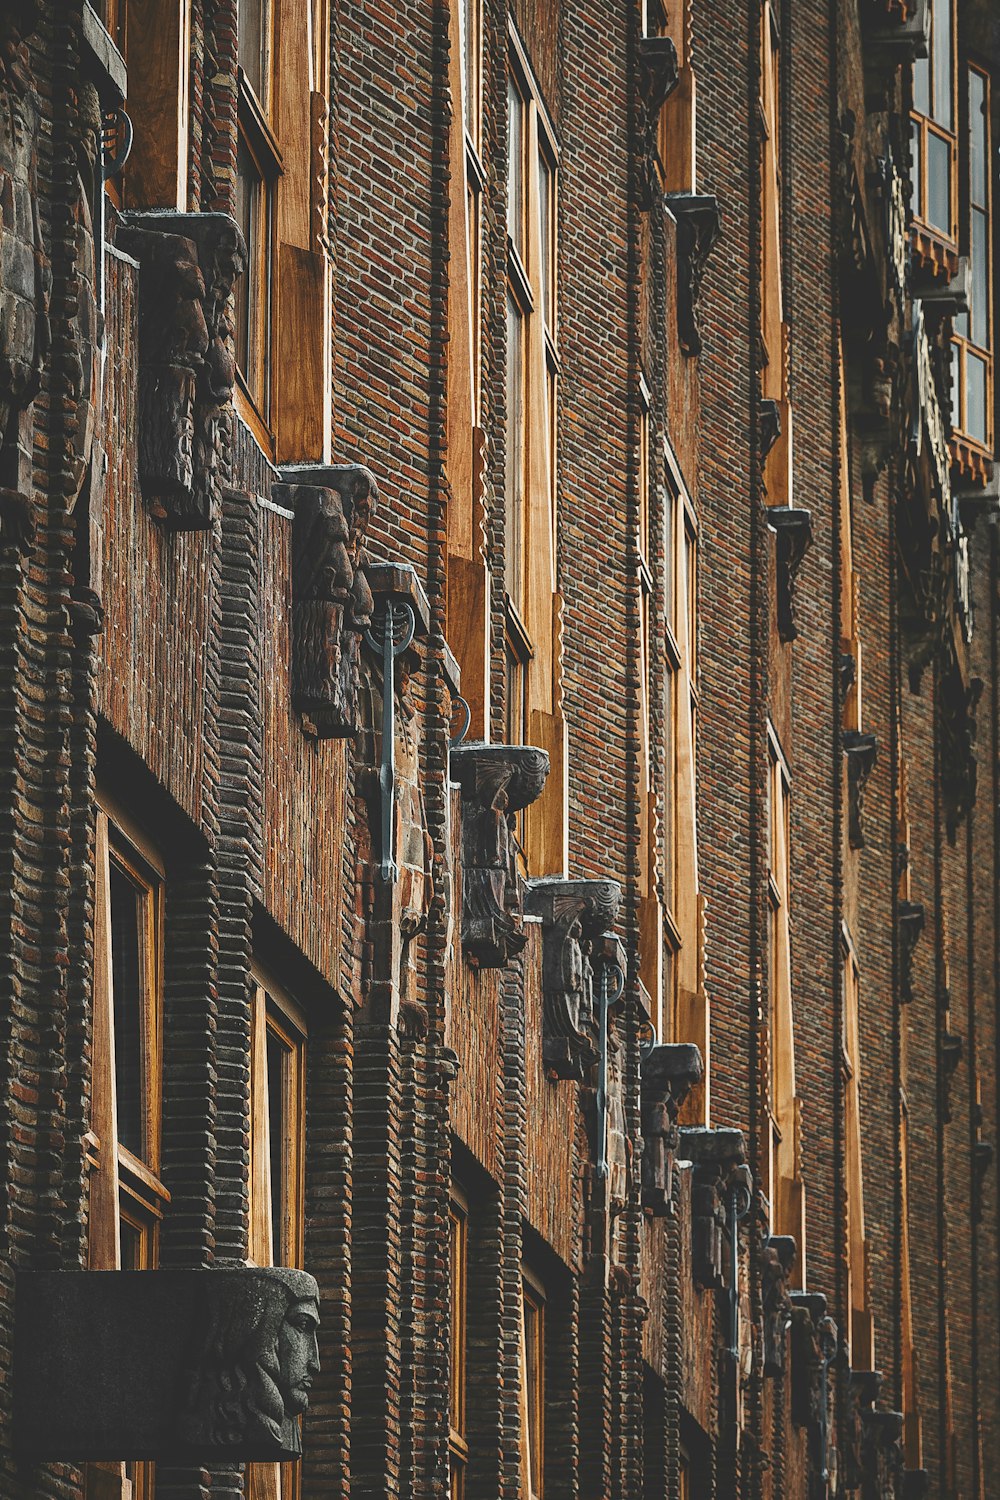 a row of windows on a brick building